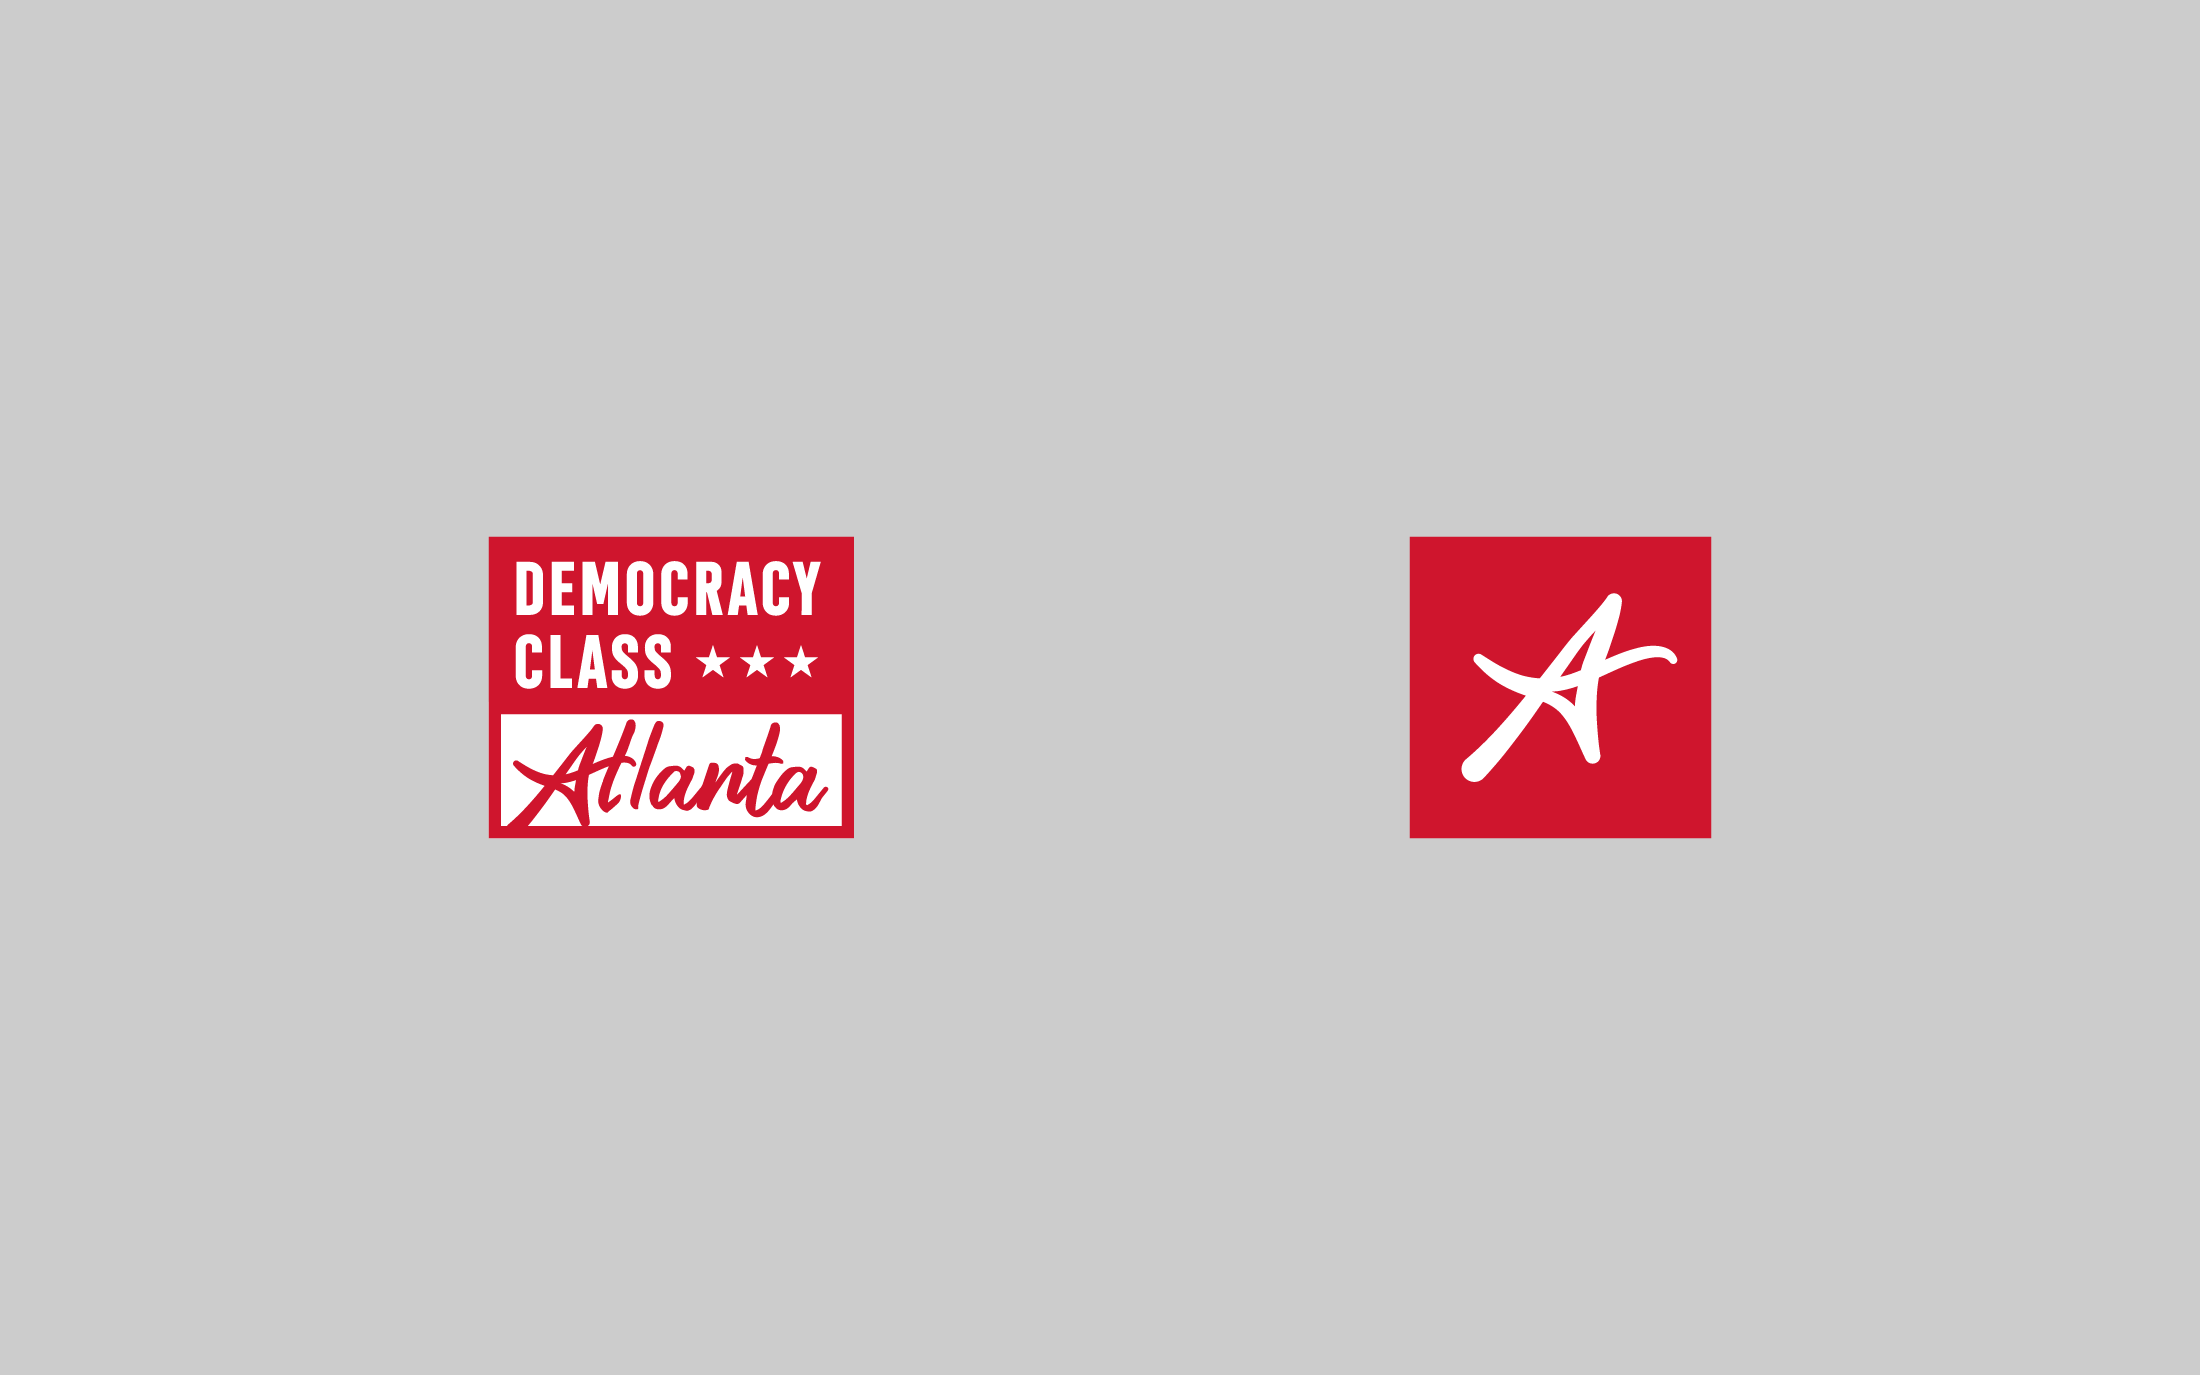 AMBSE_MKT_Democracy-Class-Atlanta-02